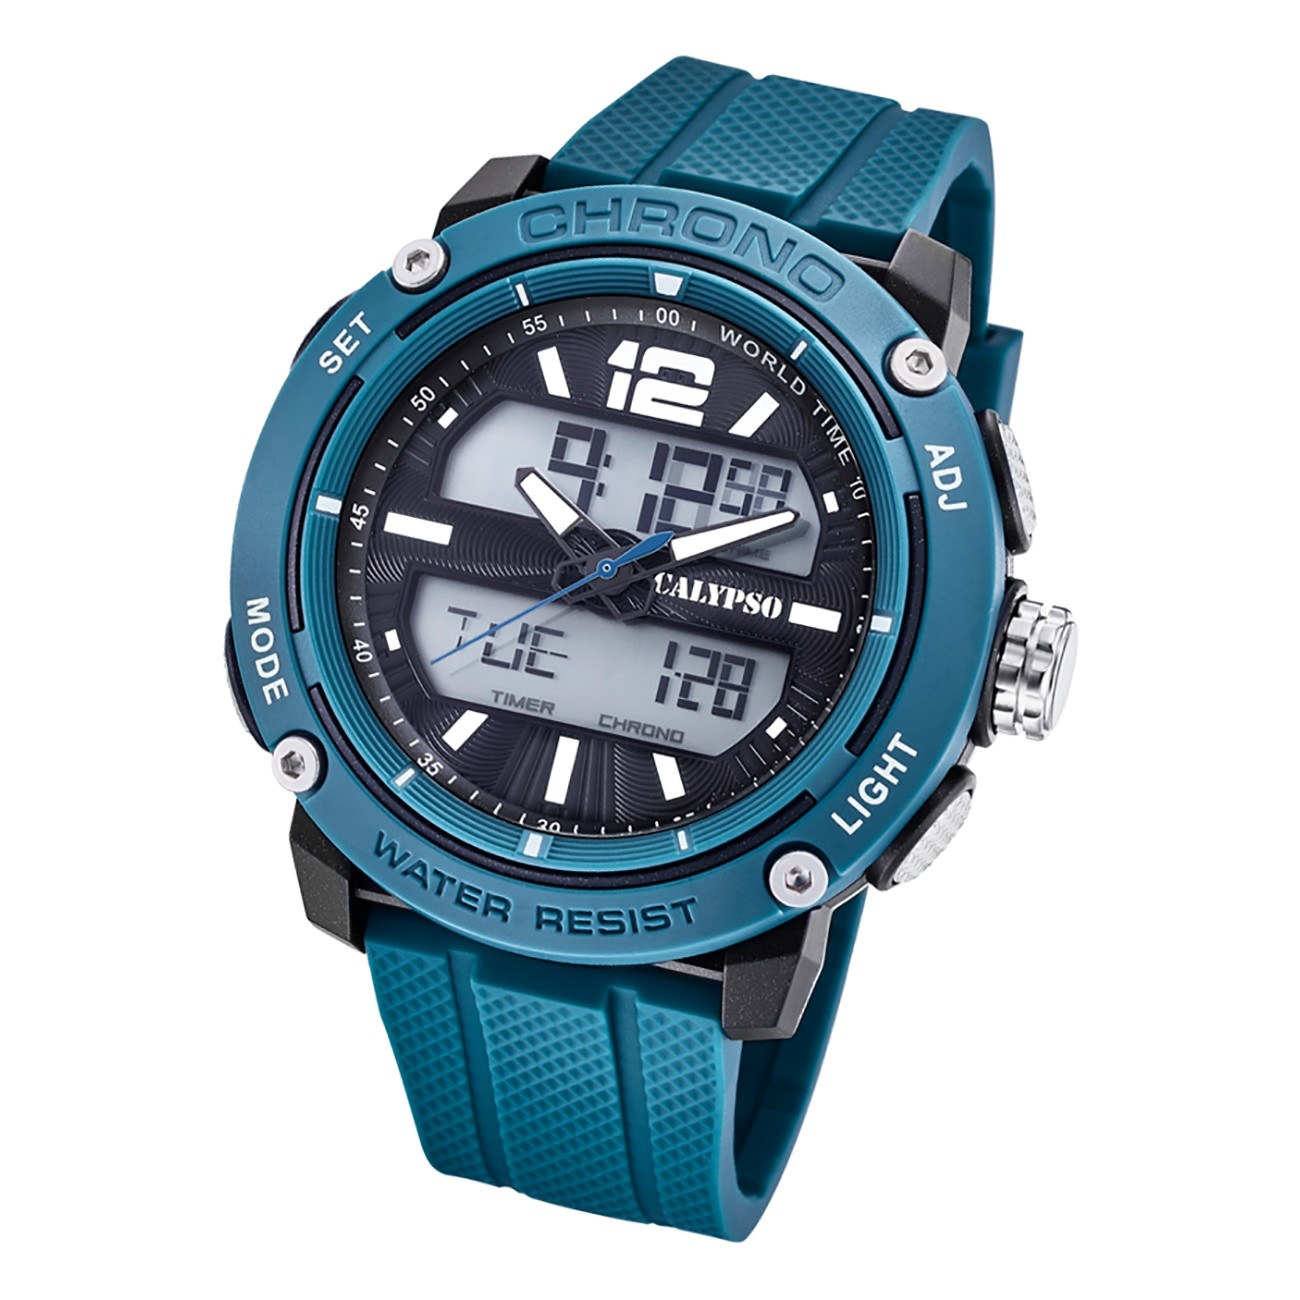 Calypso Herren Armbanduhr K5796/2 Analog-Digital Kunststoff blau UK5796/2